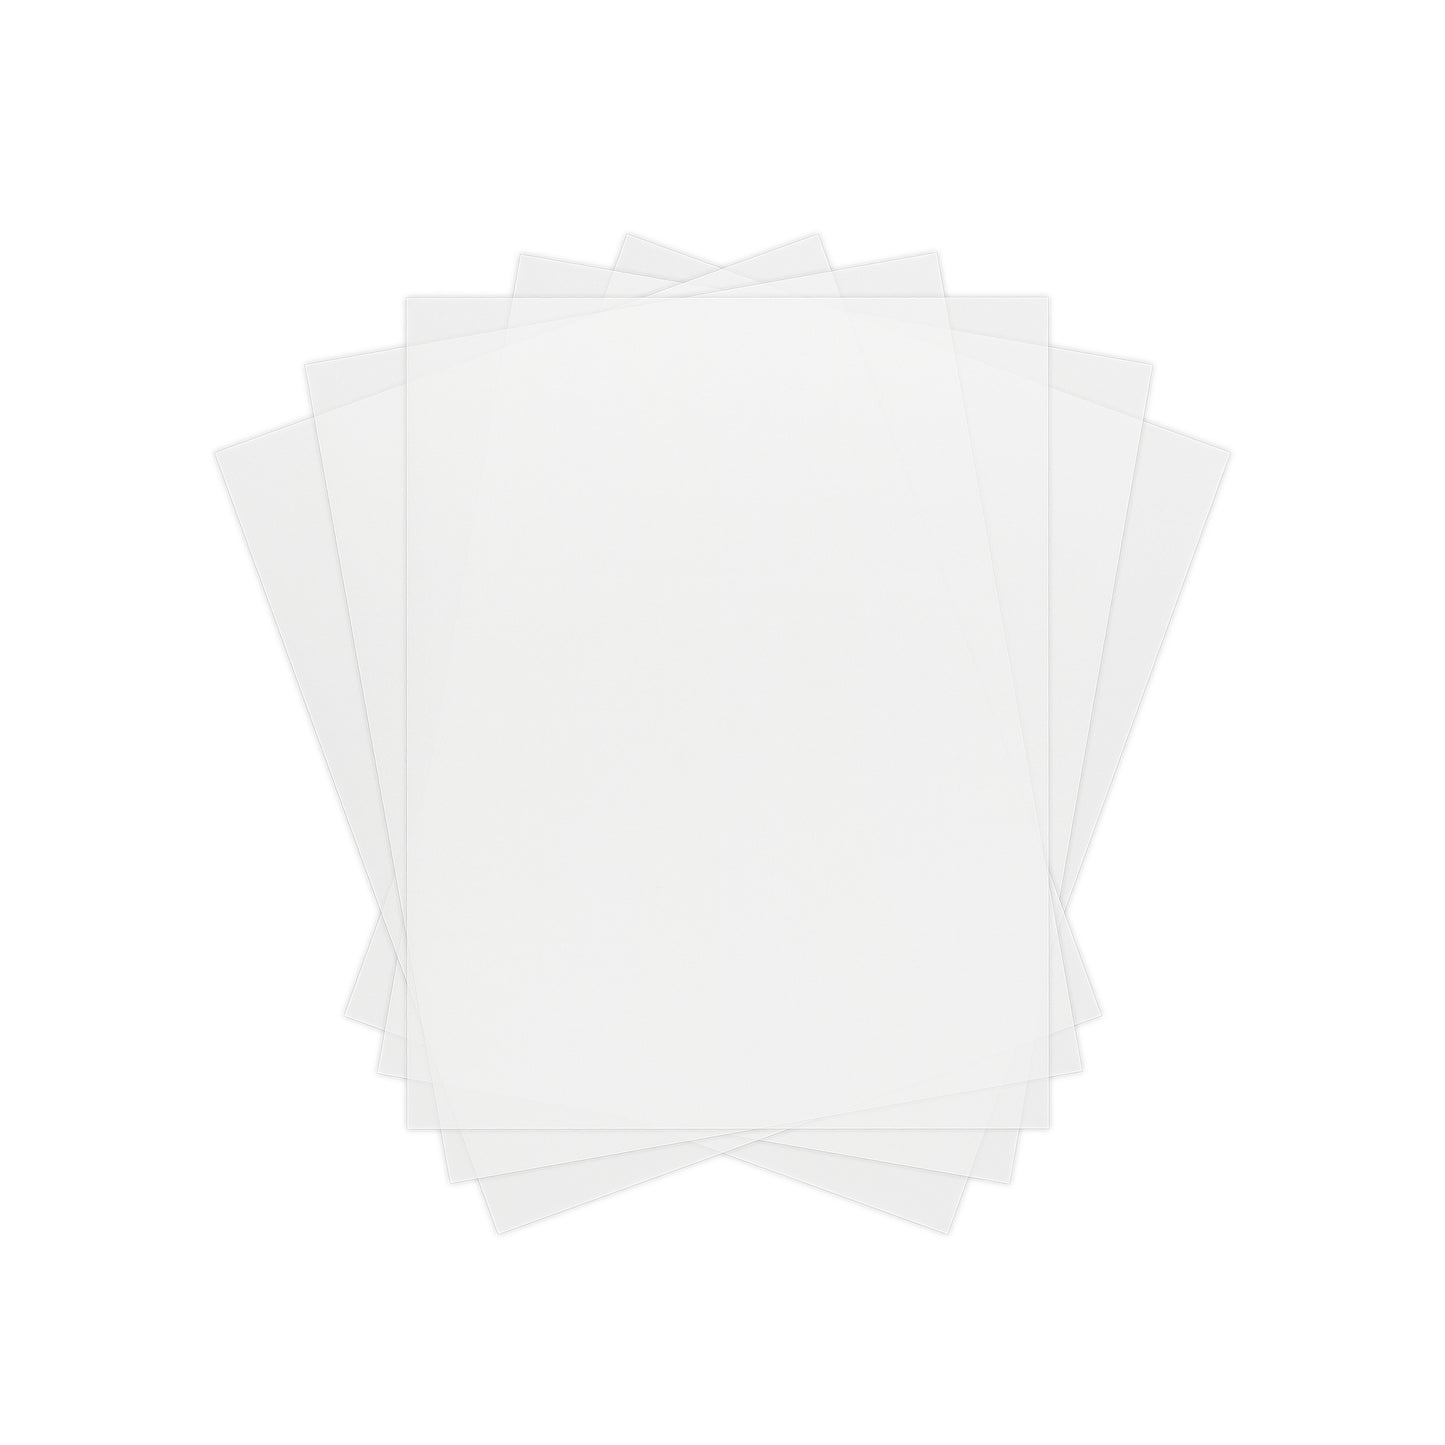 Vellum Tracing Paper 50 Sheet Pad